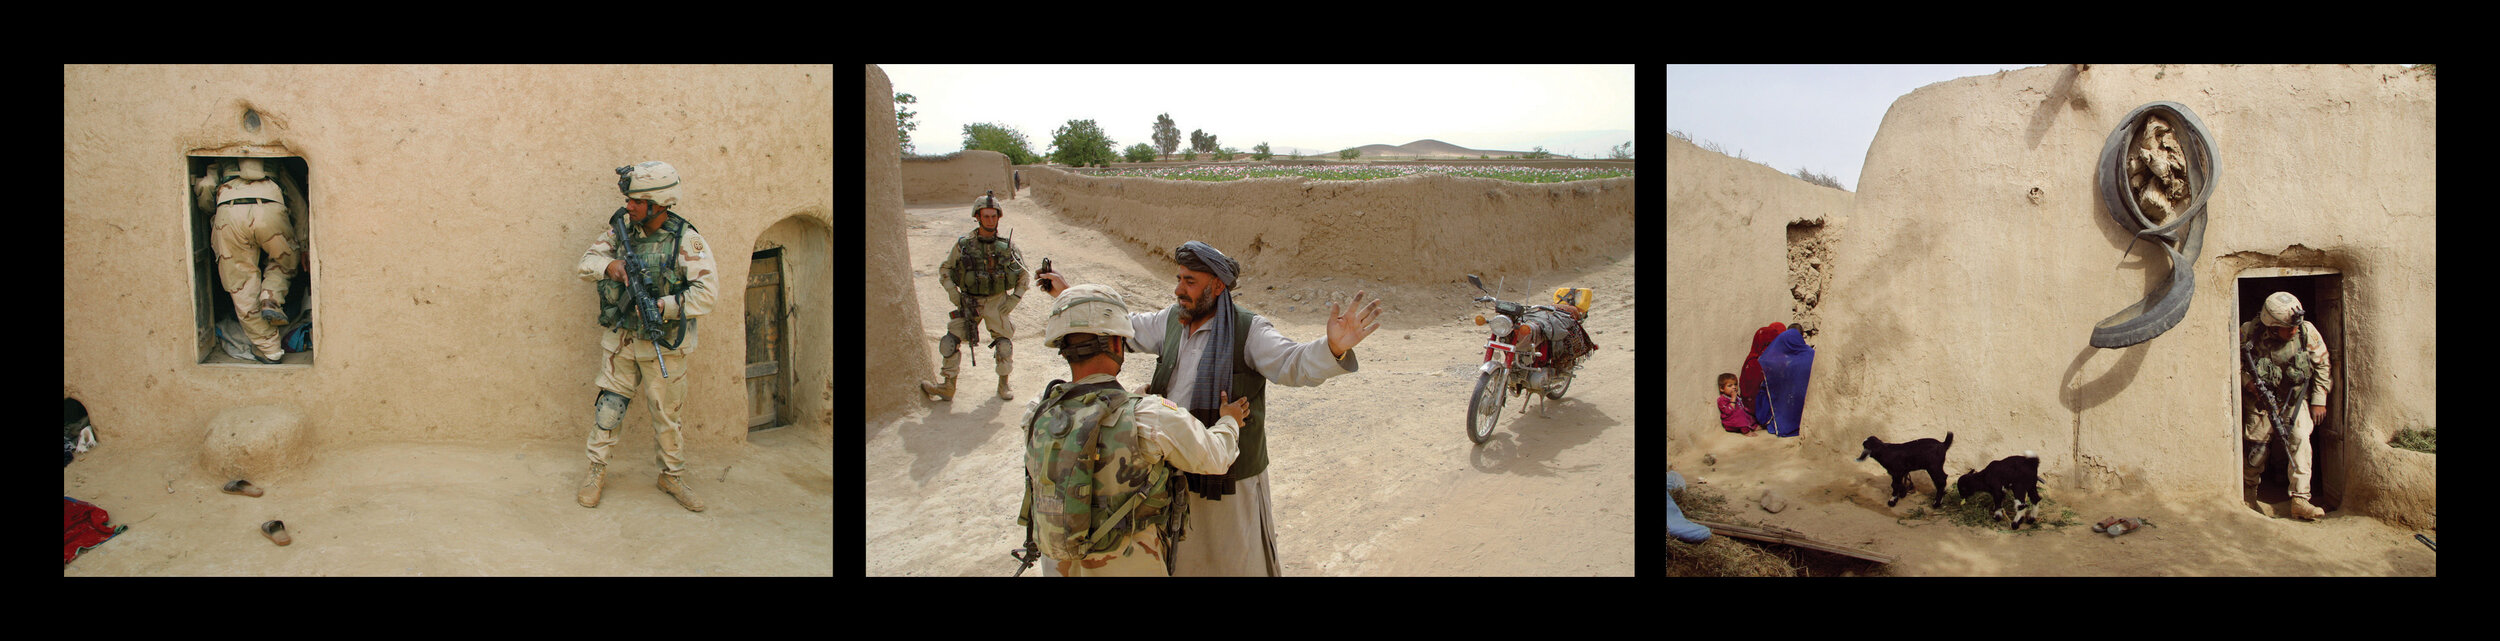  Afghanistan | 2003 (L) (C) (R)     